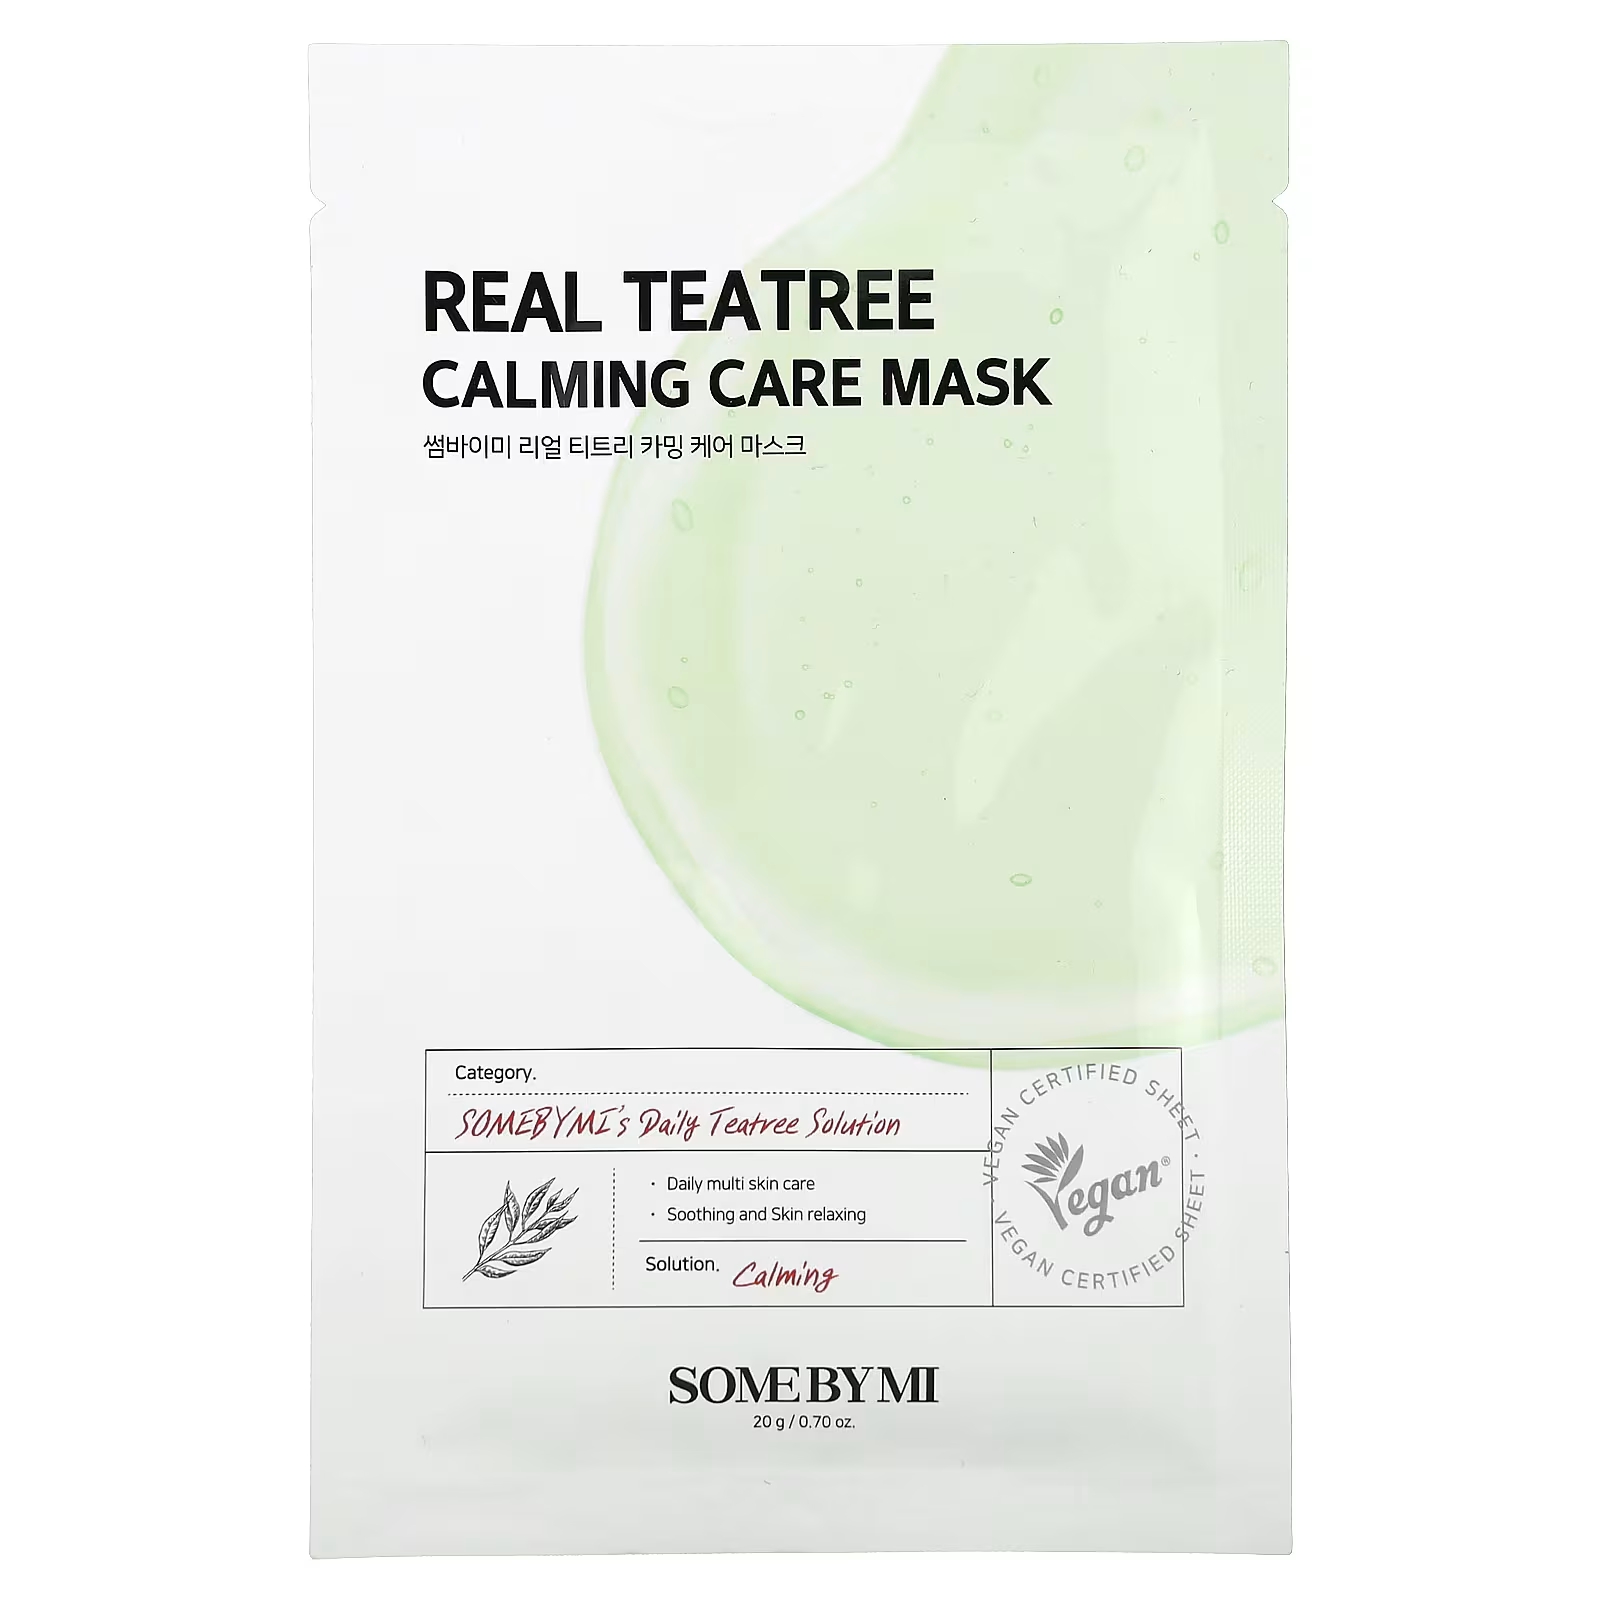 SOME BY MI Real Tea Tree Calming Care Beauty Mask, 1 лист, 0,70 унции (20 г) some by mi real cica calming care beauty mask 1 лист 0 70 унции 20 г